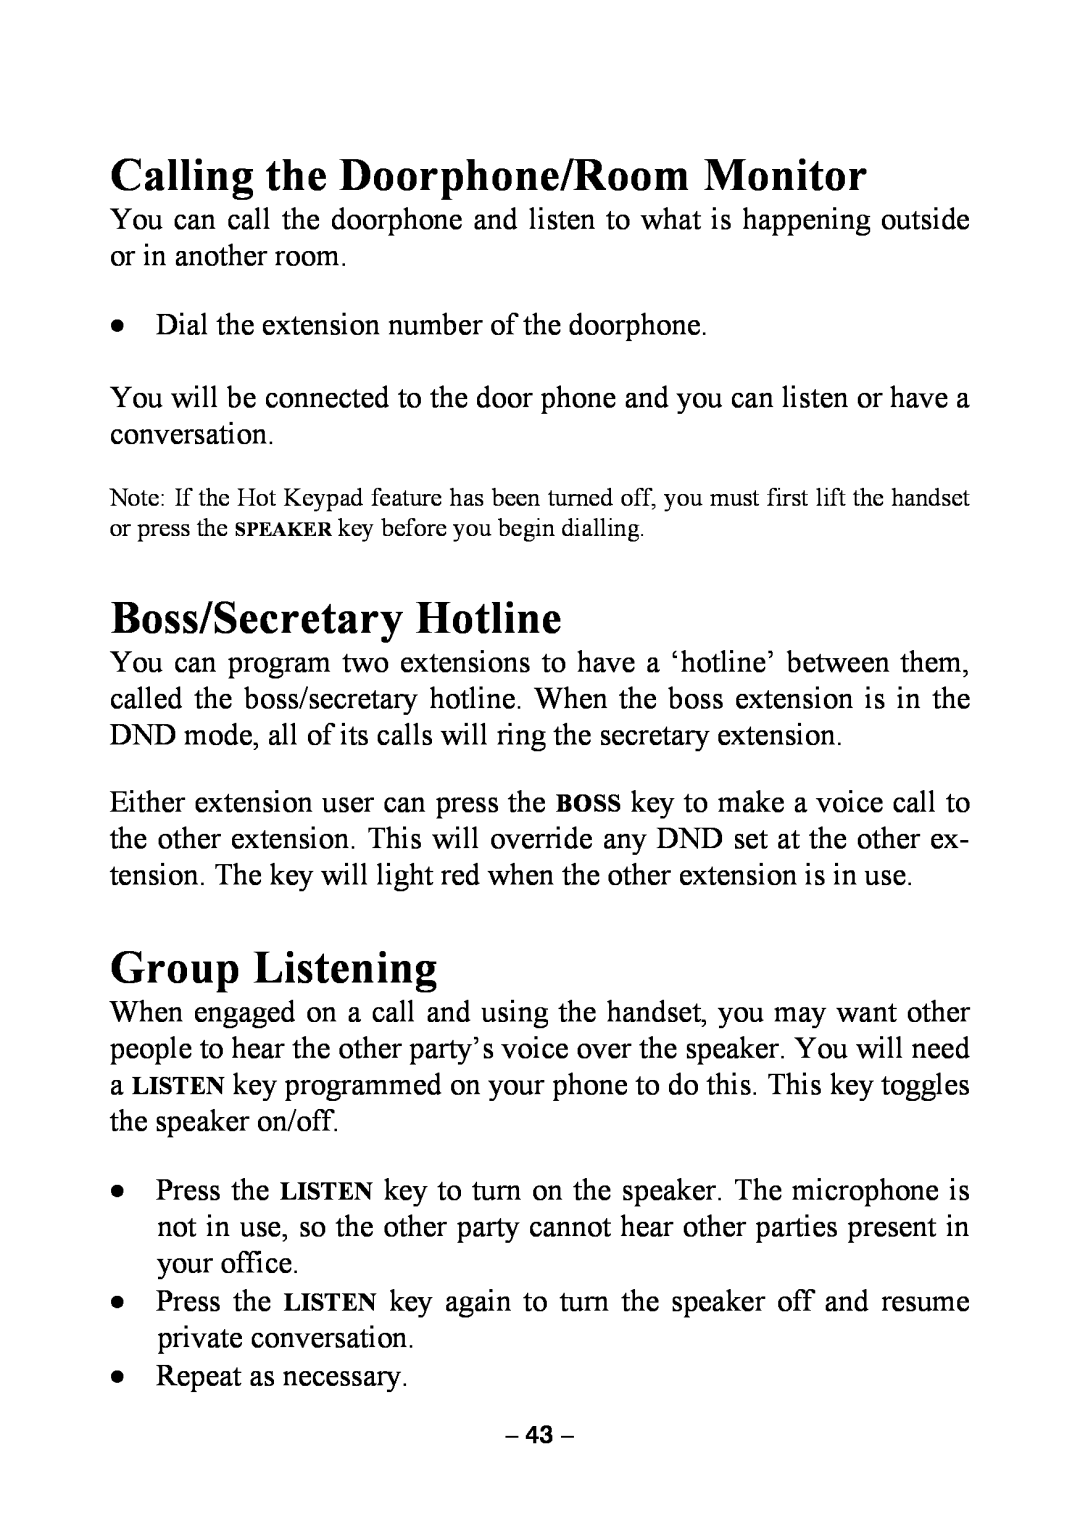 Samsung DCS KEYSET manual Calling the Doorphone/Room Monitor, Boss/Secretary Hotline, Group Listening 